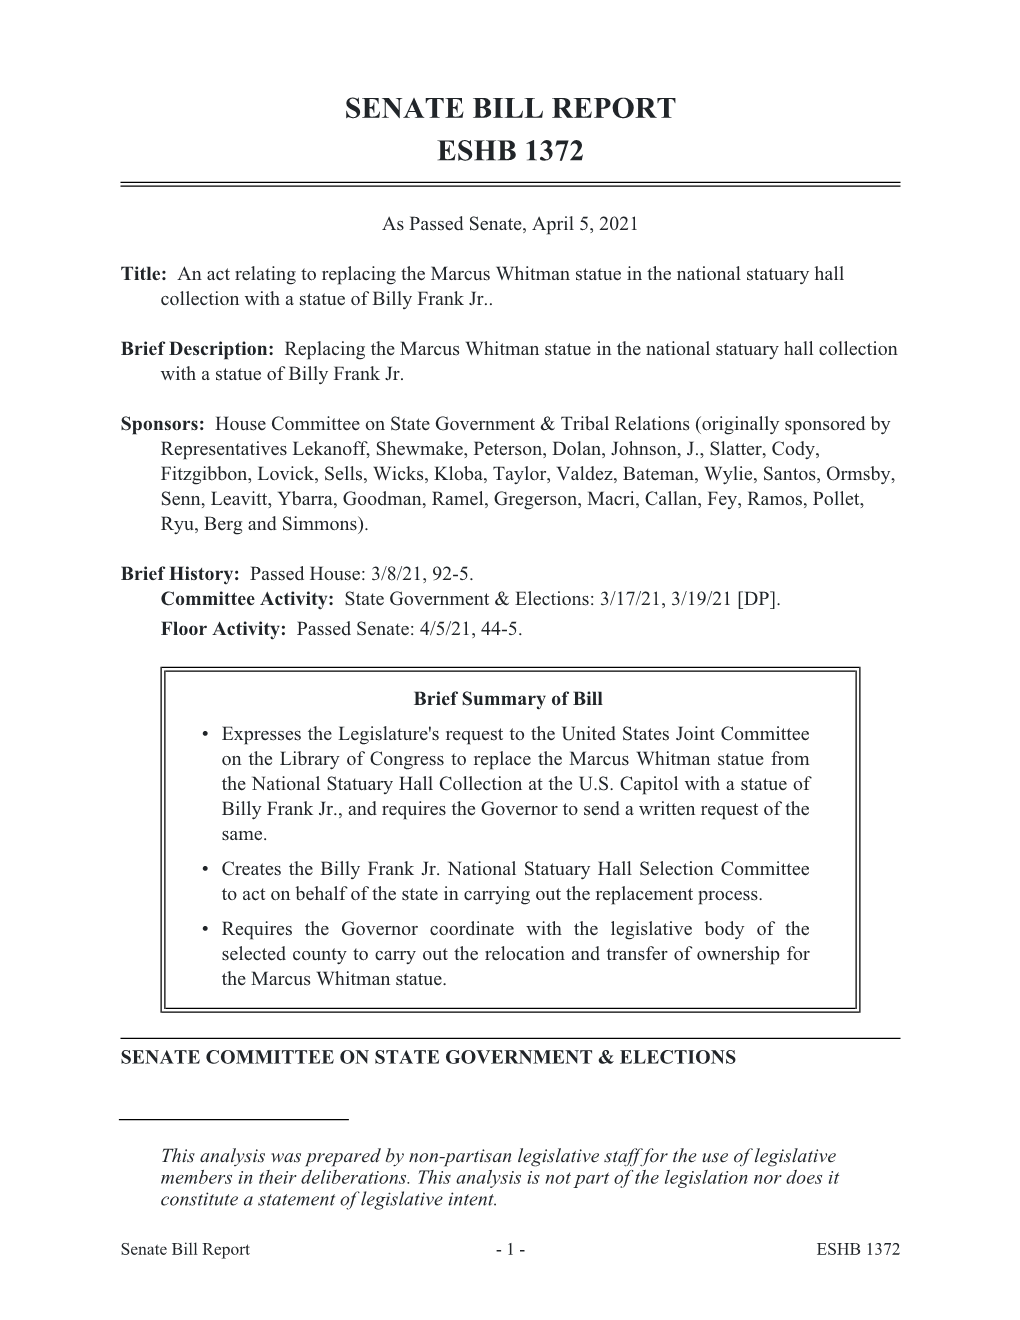 Senate Bill Report Eshb 1372